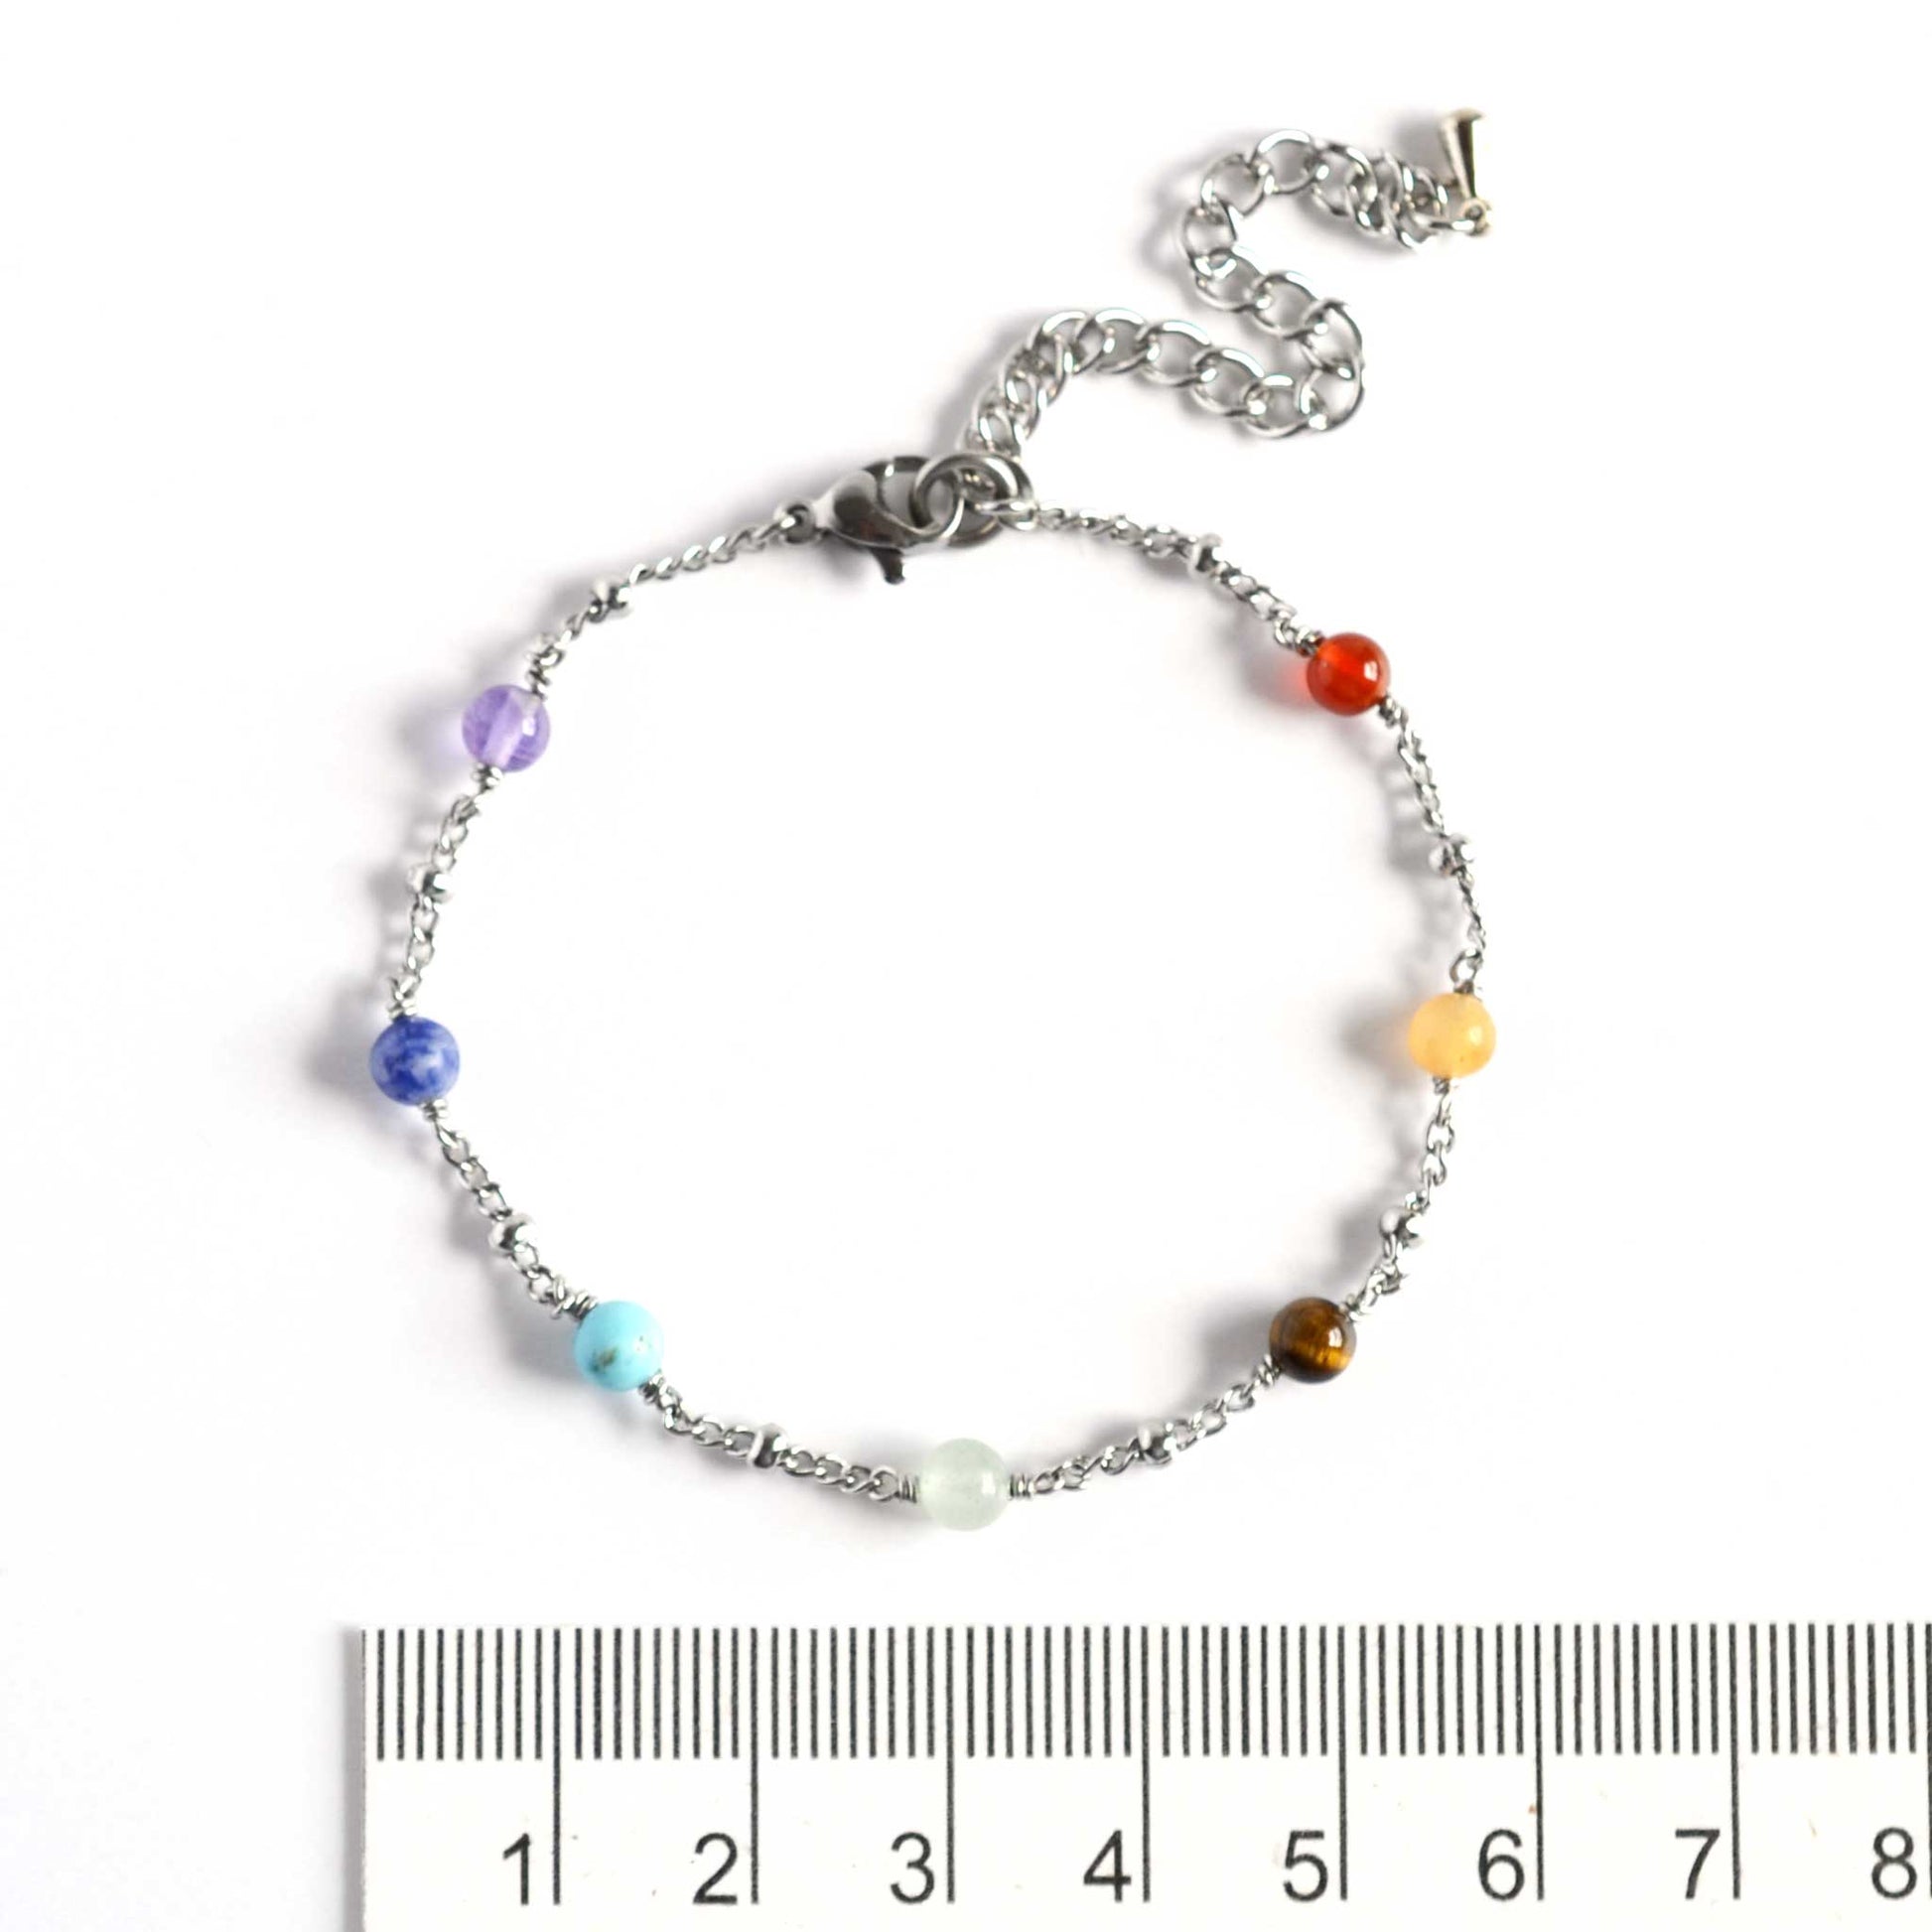 Dainty chakra bracelet with 4mm gemstone beads next to ruler